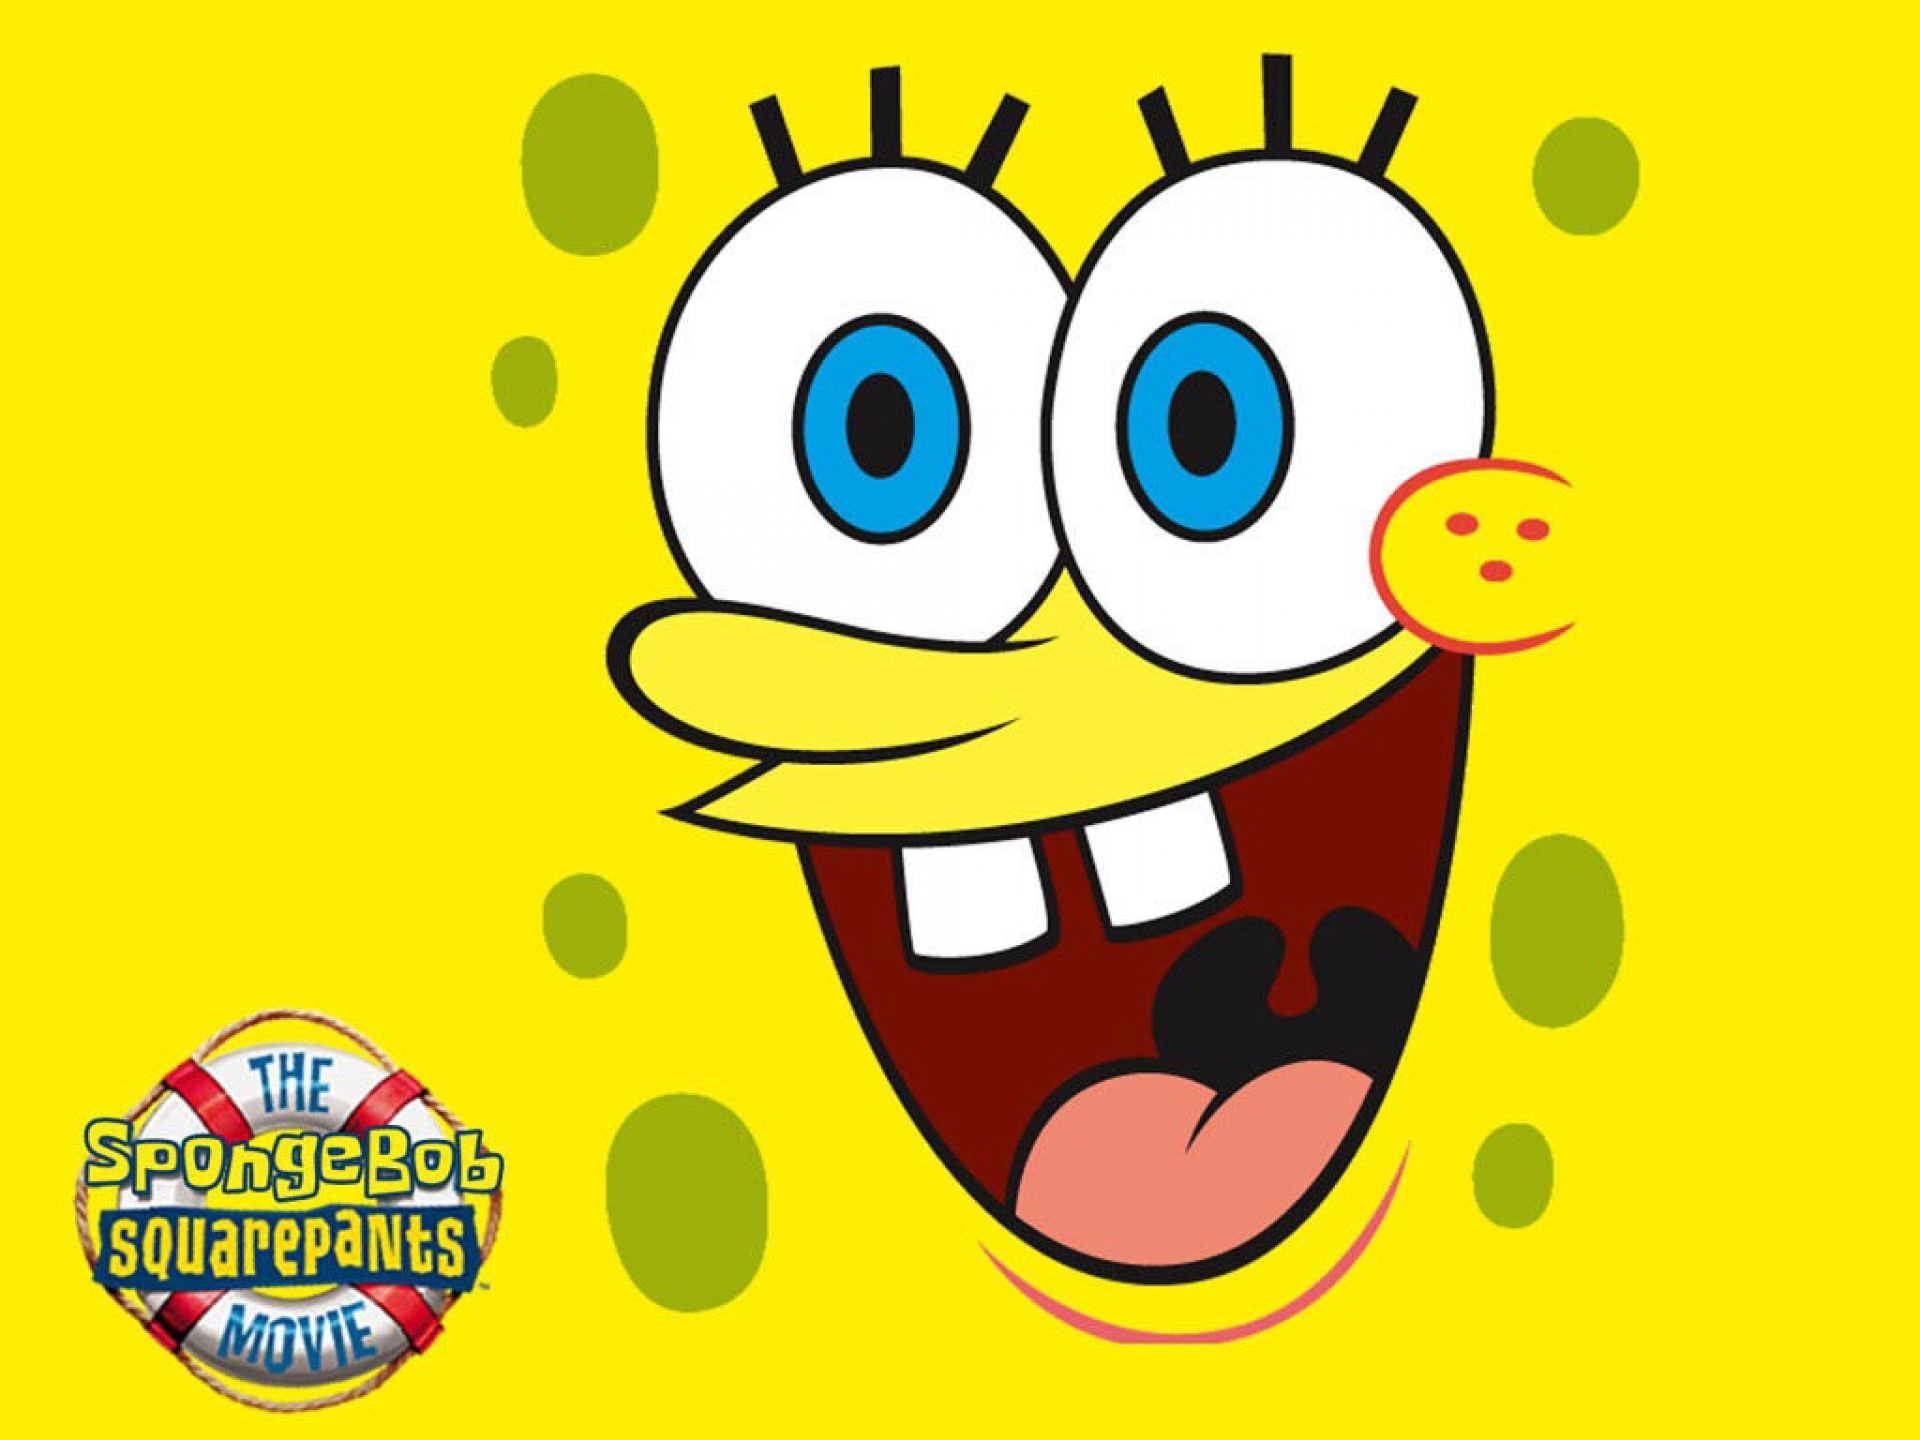 Funny-faces-cartoon-spongebob (1) - FreakyPic.com | Funny Images 